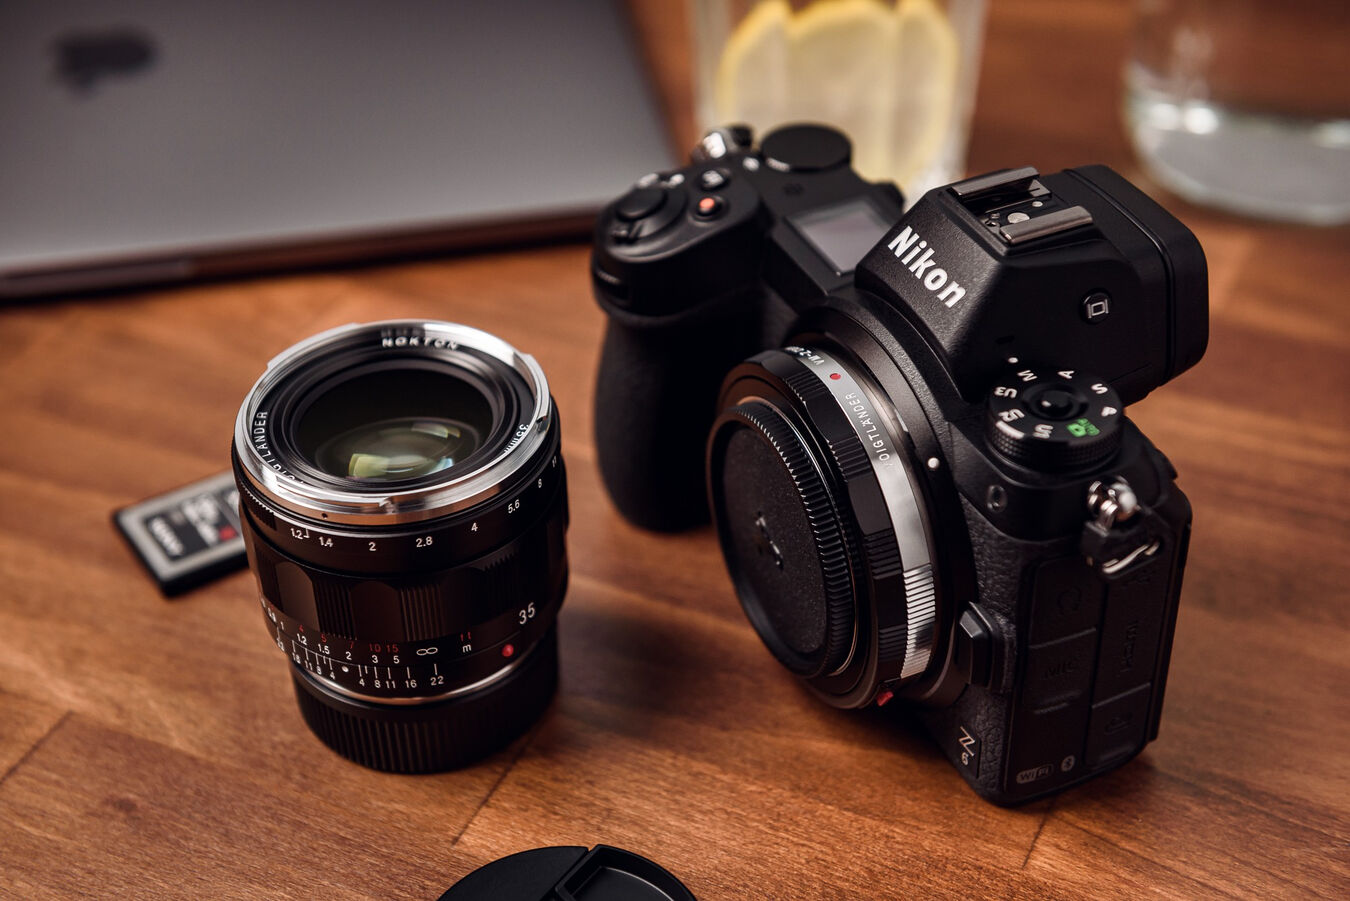 Adapter bagnetowy Voigtlander Close Focus Leica M / Nikon Z